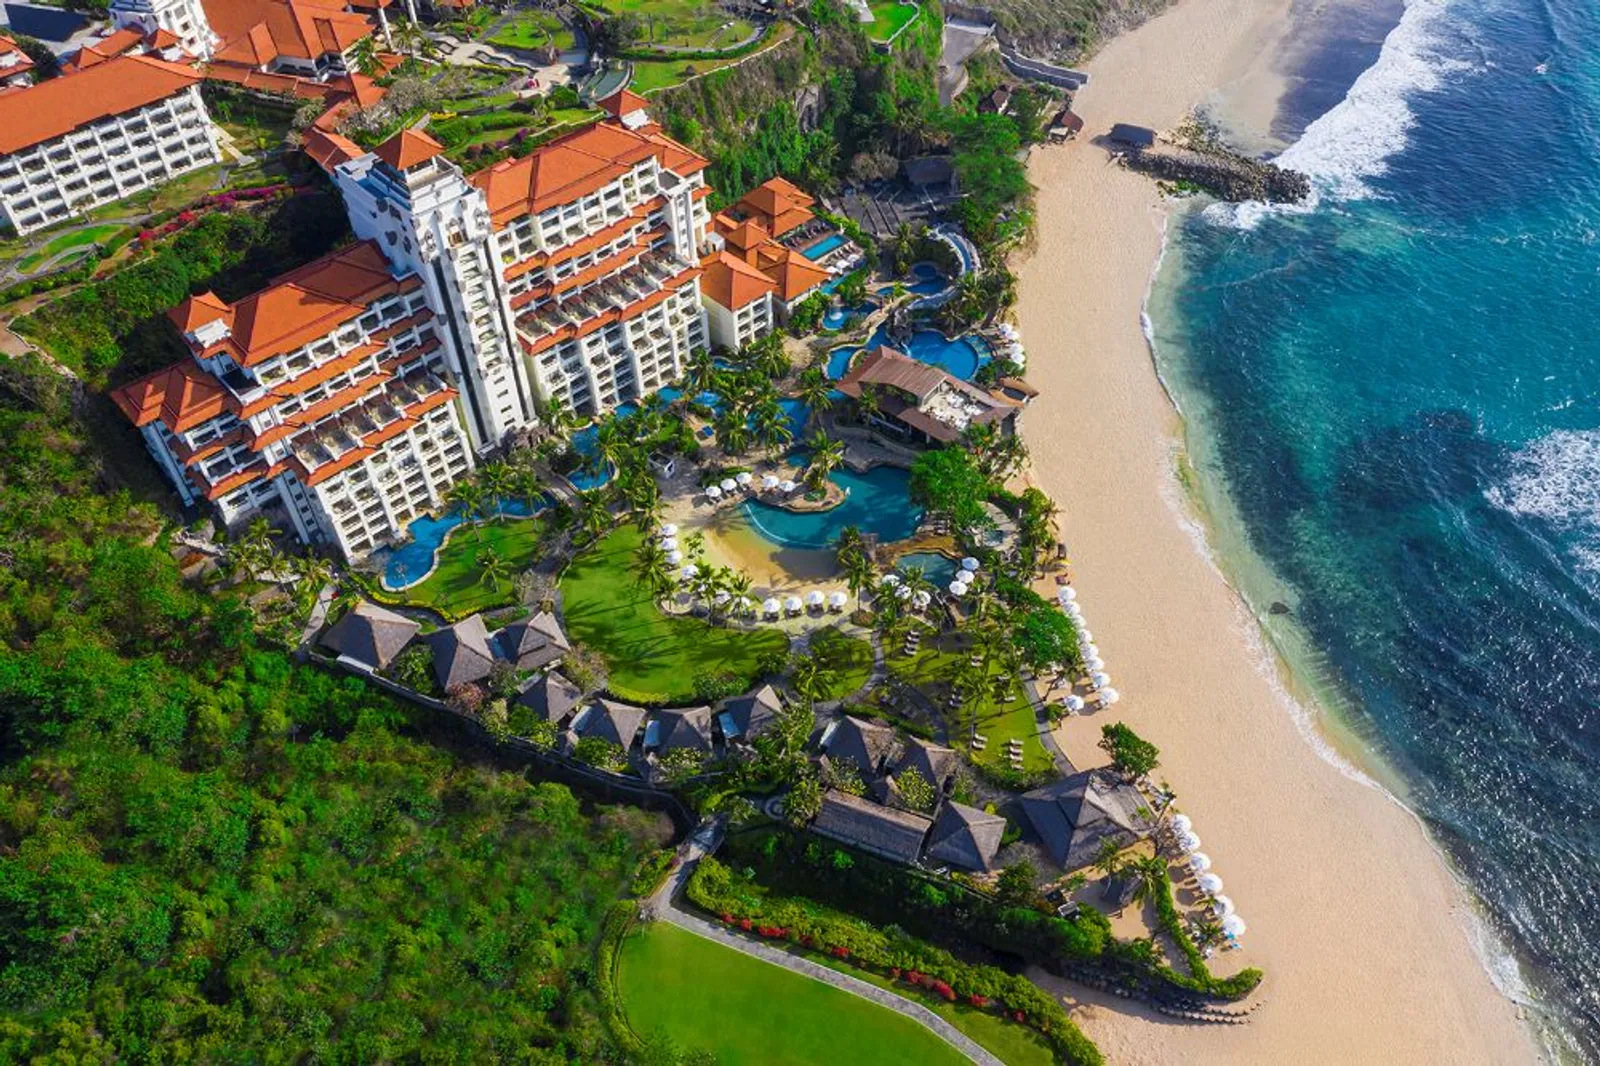 Rayakan Tahun Baru Versi Ramah Lingkungan Bersama Hilton Resort Bali